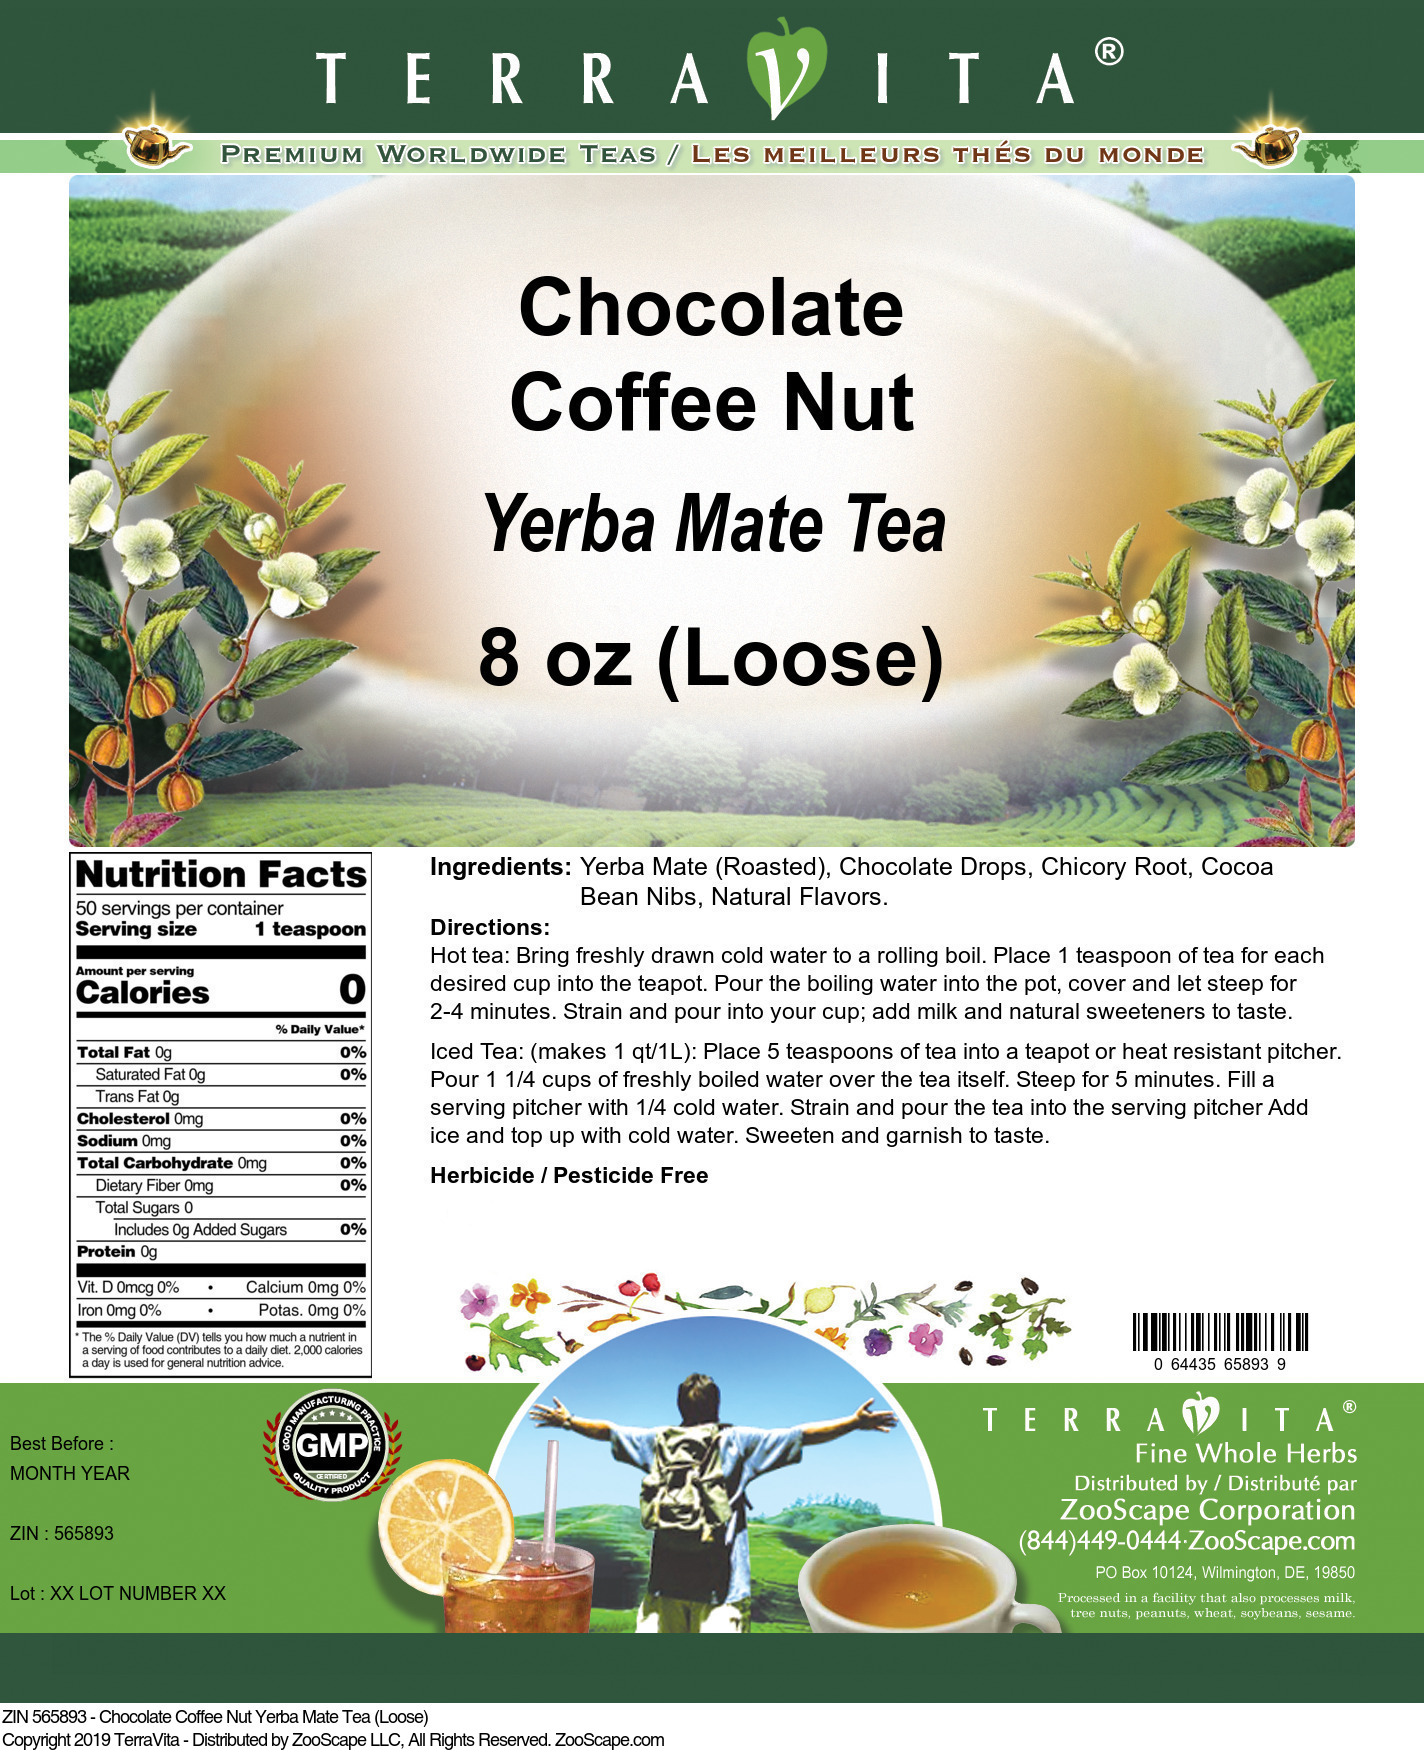 Chocolate Coffee Nut Yerba Mate Tea (Loose) - Label